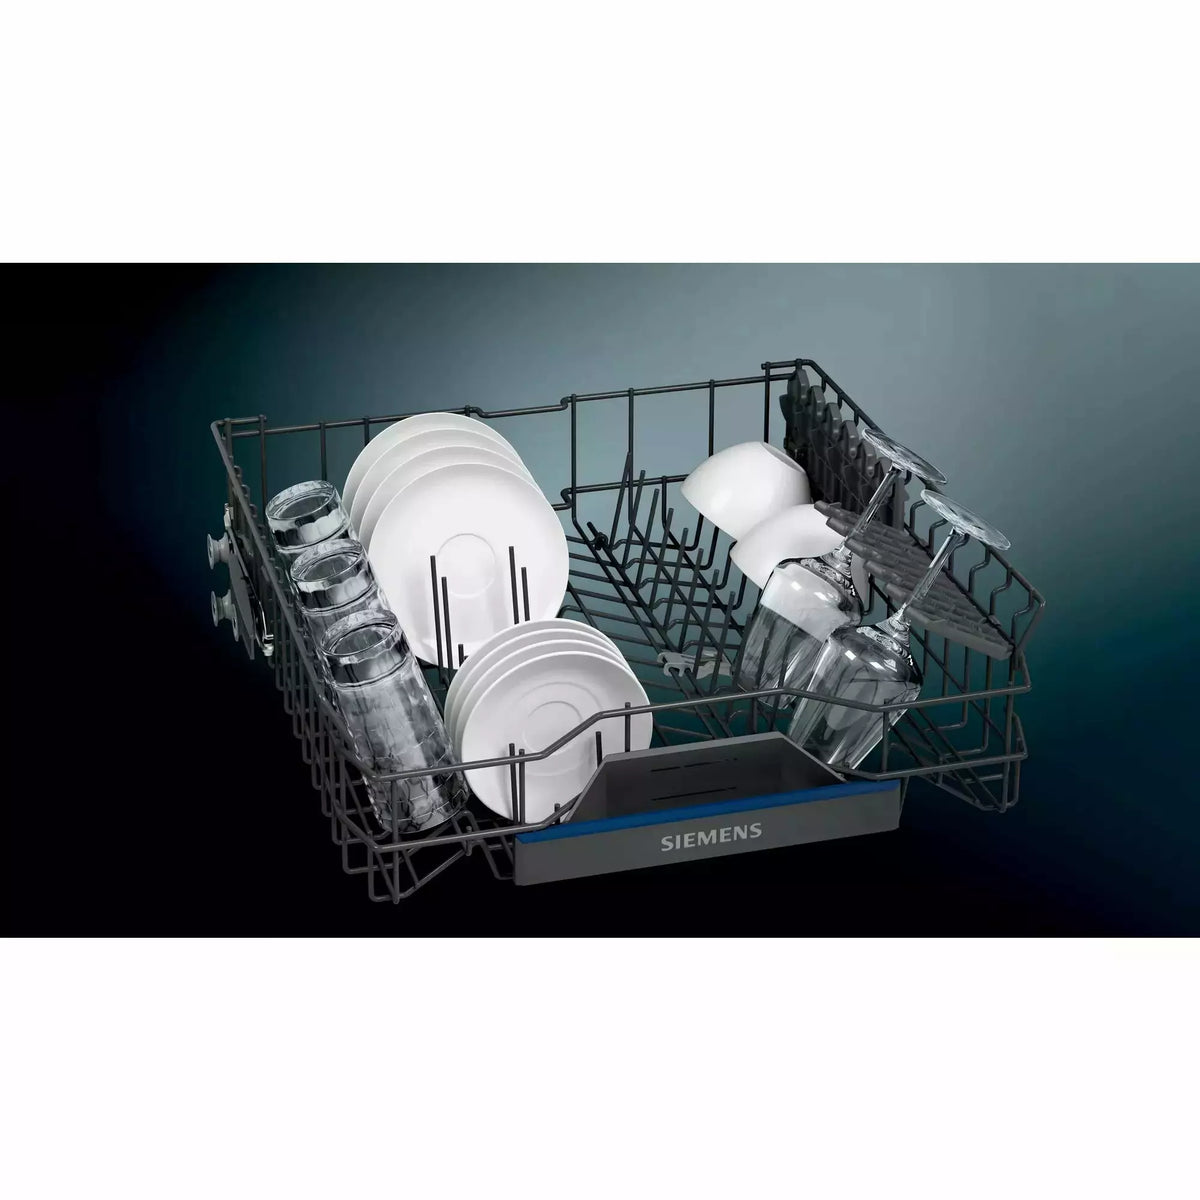 Siemens iQ300 60CM 13 Place Freestanding Dishwasher - Black Inox | SN23EC14CG (7562277257404)